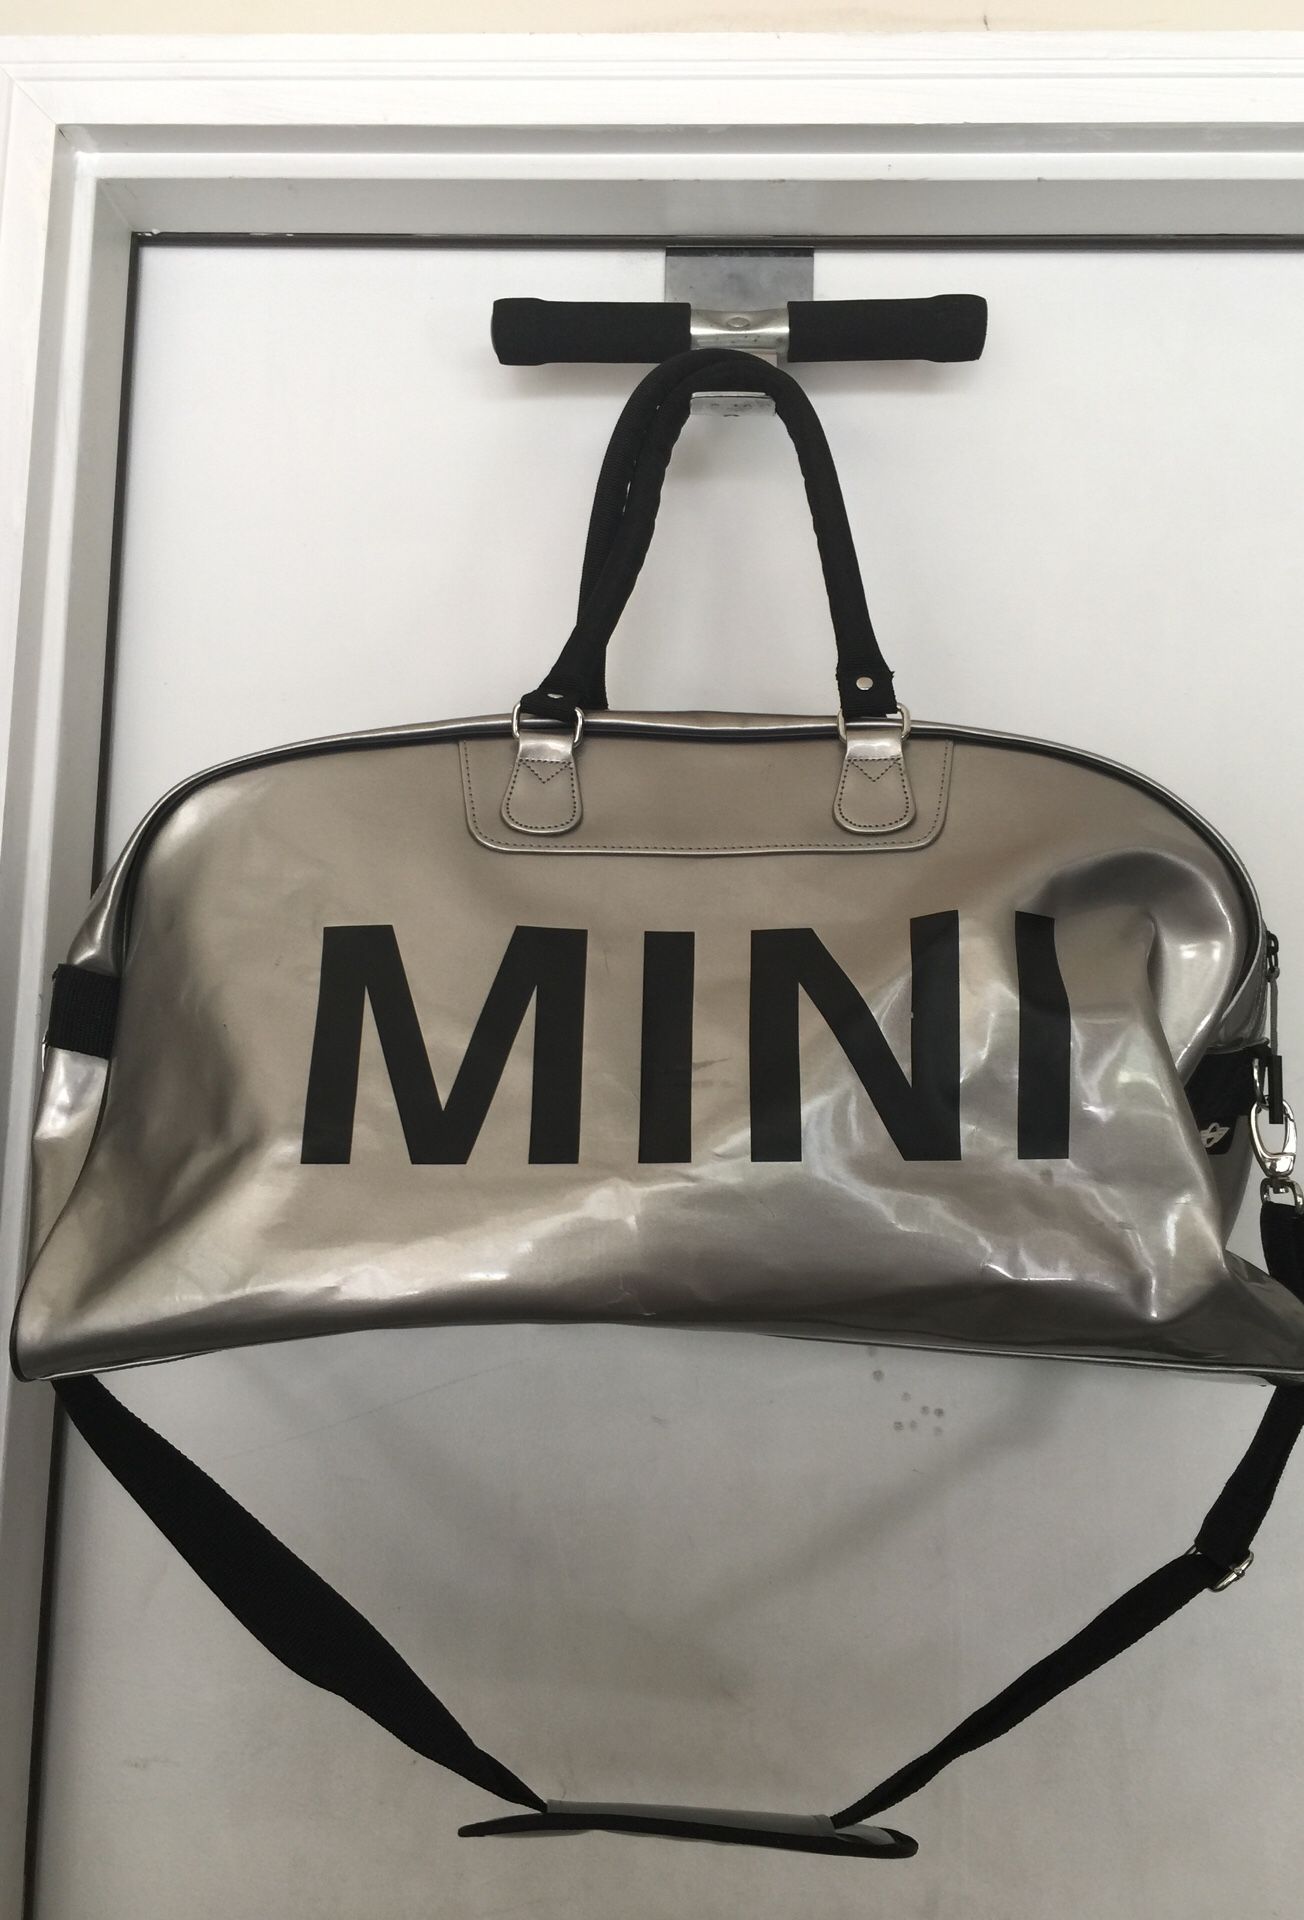 BMW Mini Cooper Bag for Sale in Mountain, GA - OfferUp